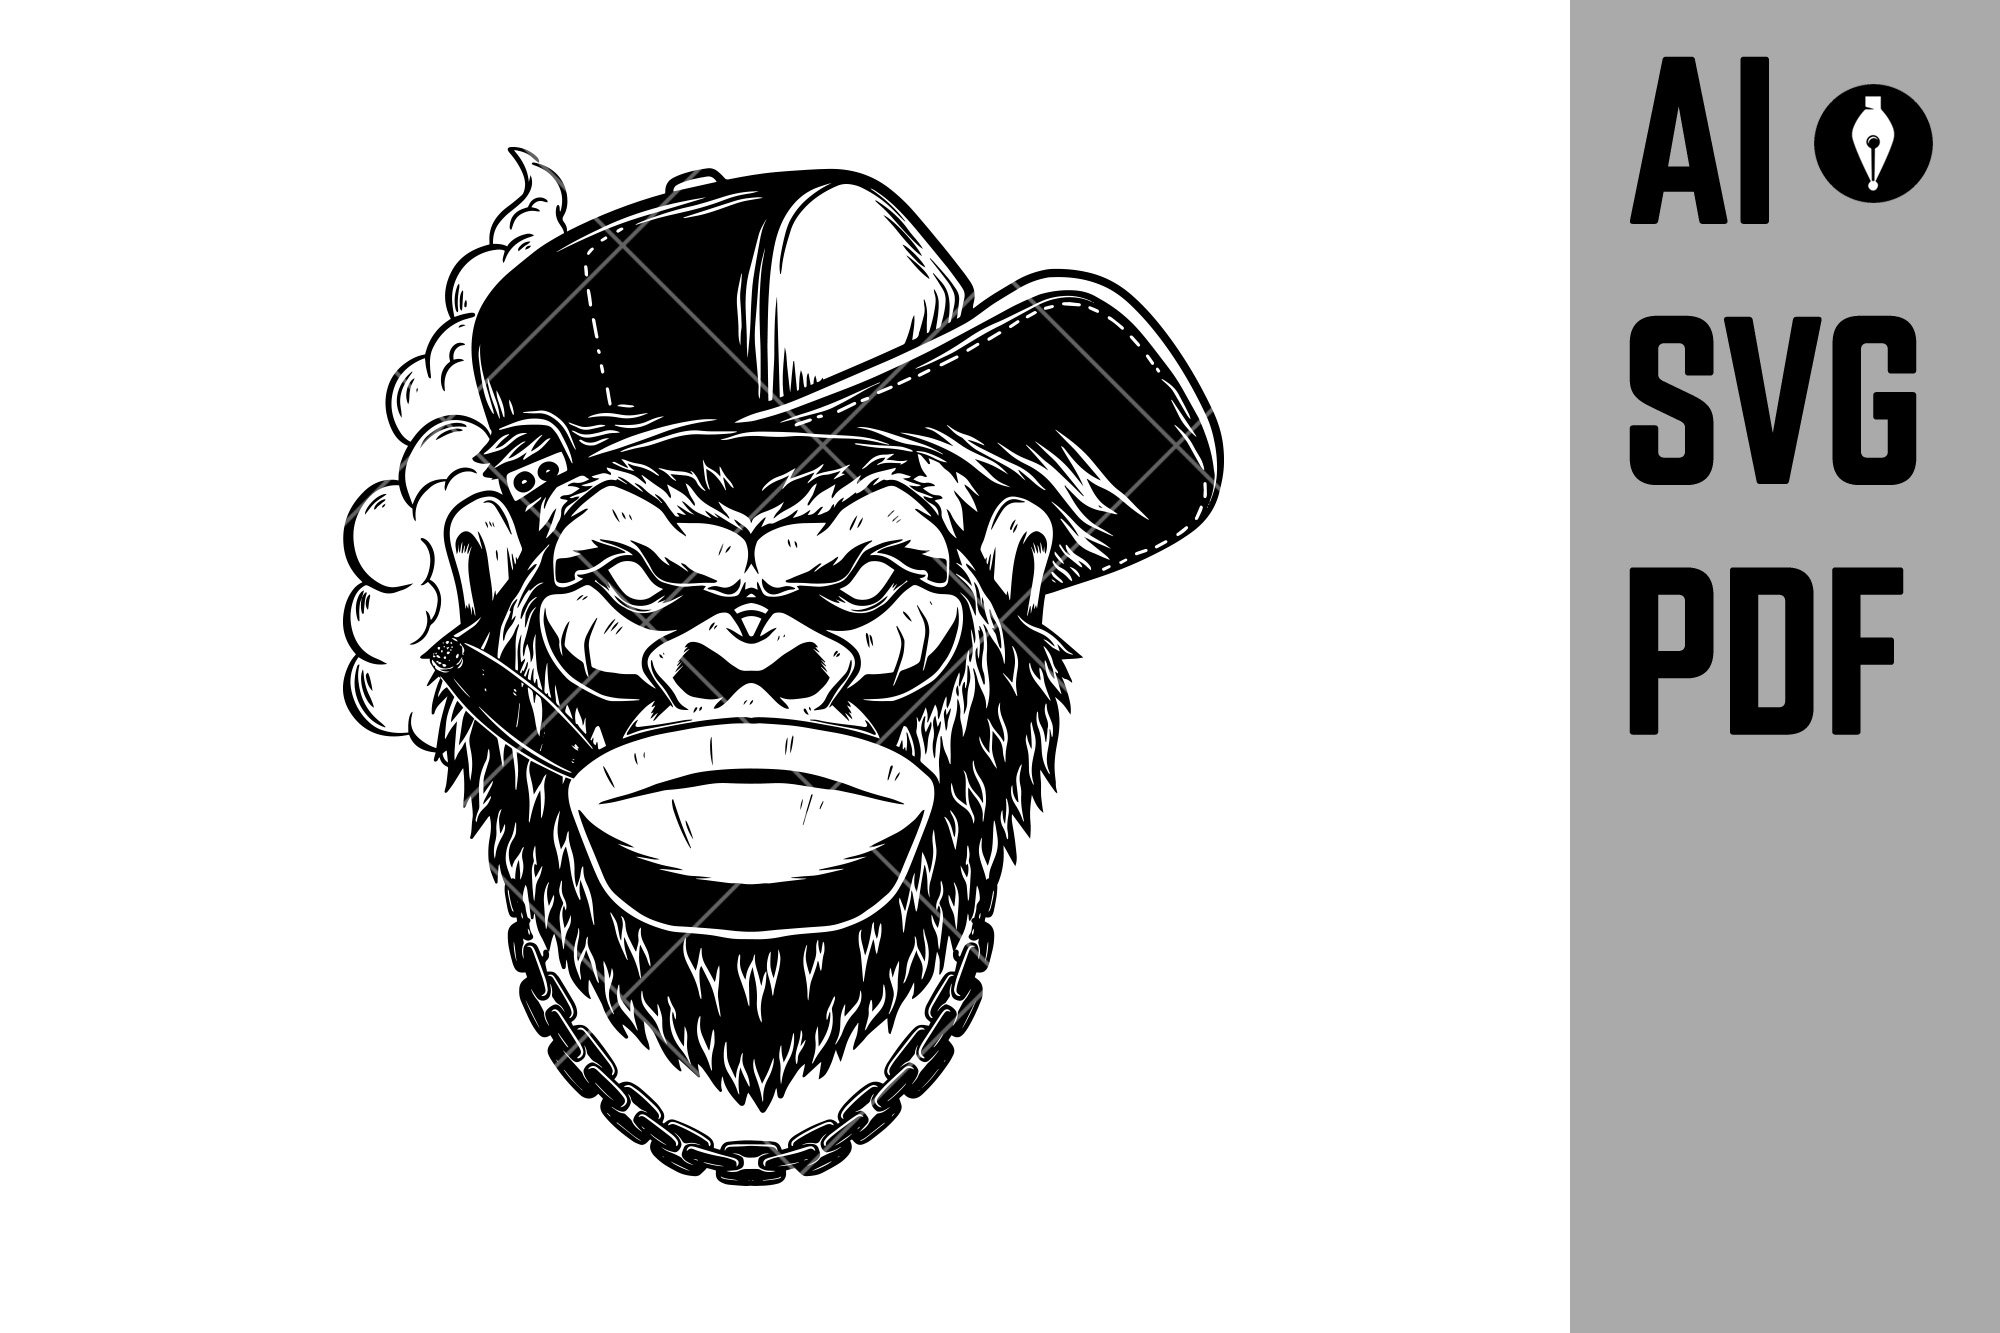 Illustration of head of gorilla cover image.